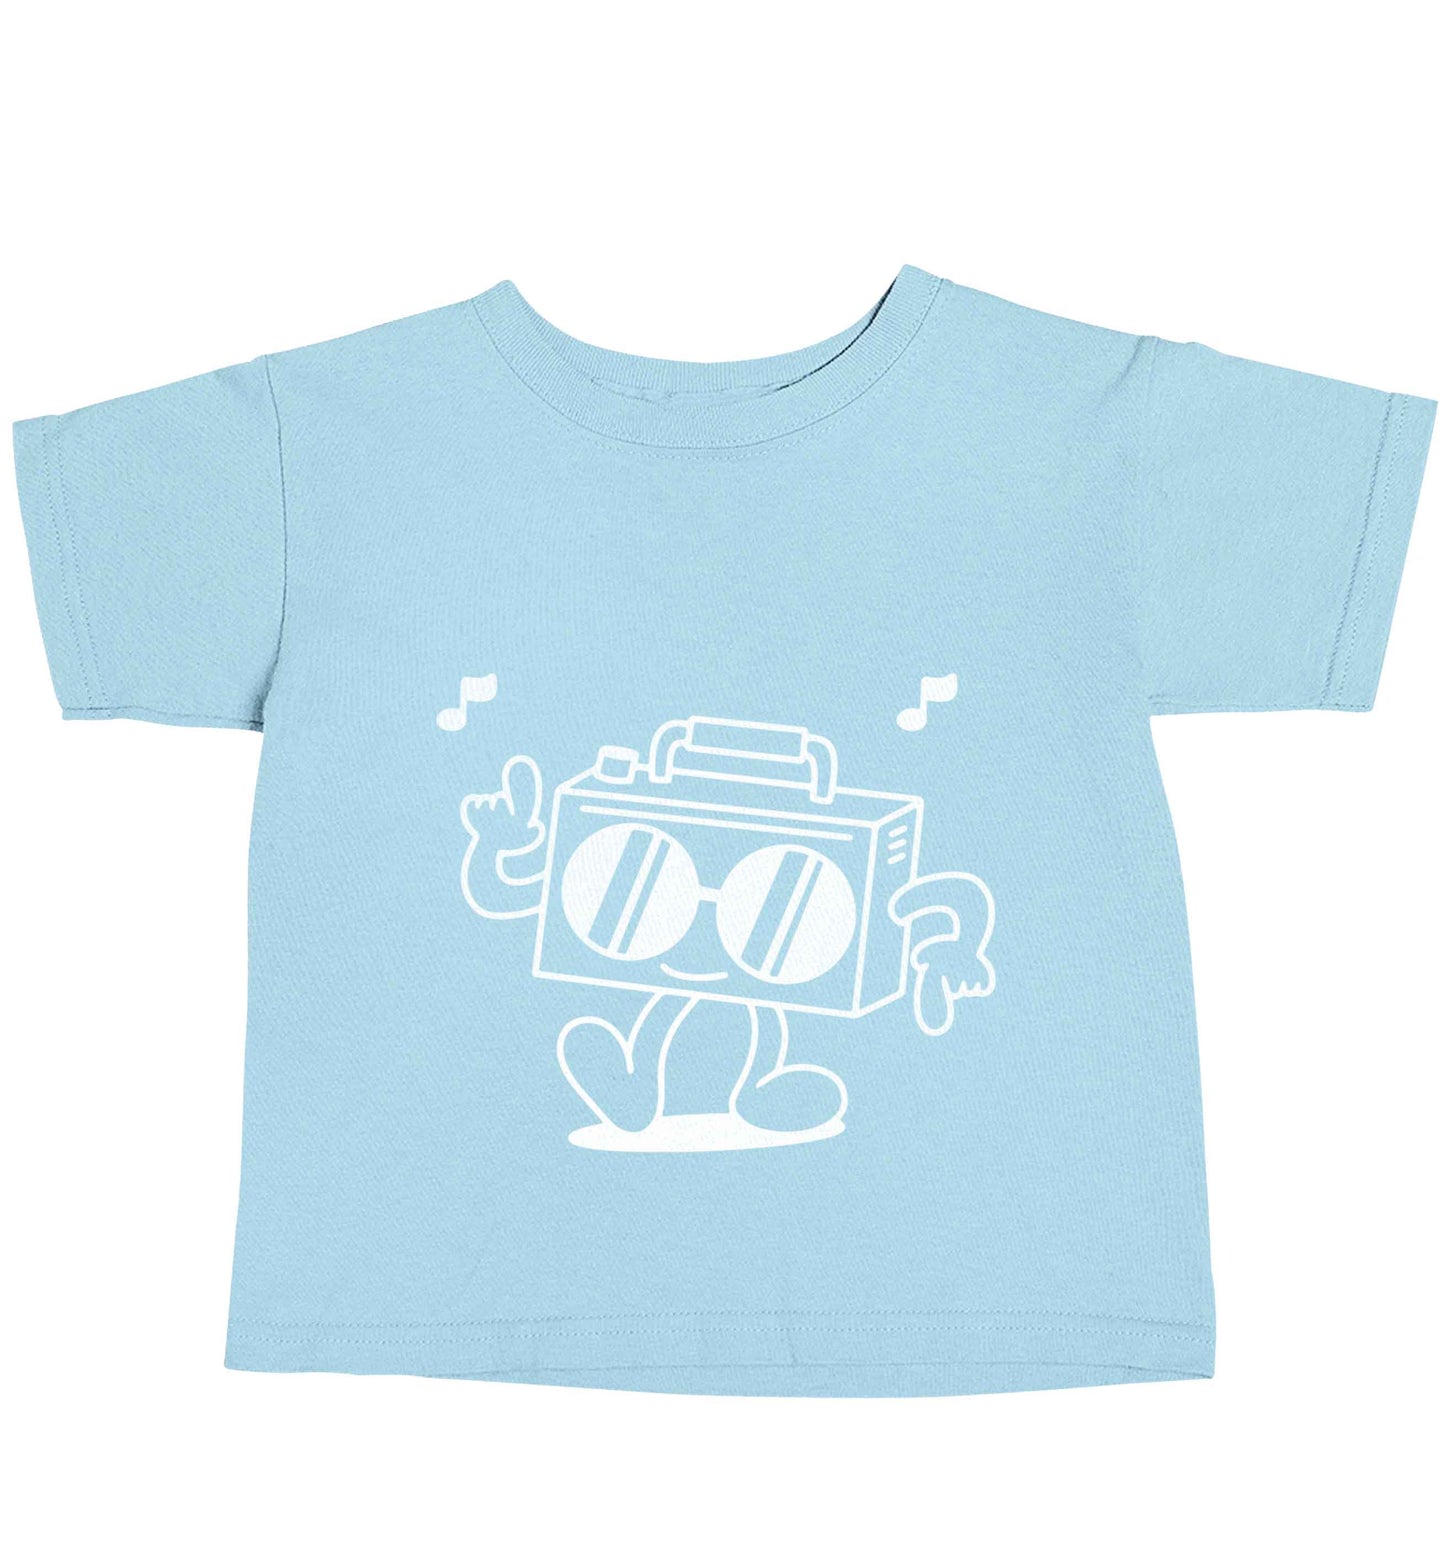 Boombox light blue baby toddler Tshirt 2 Years